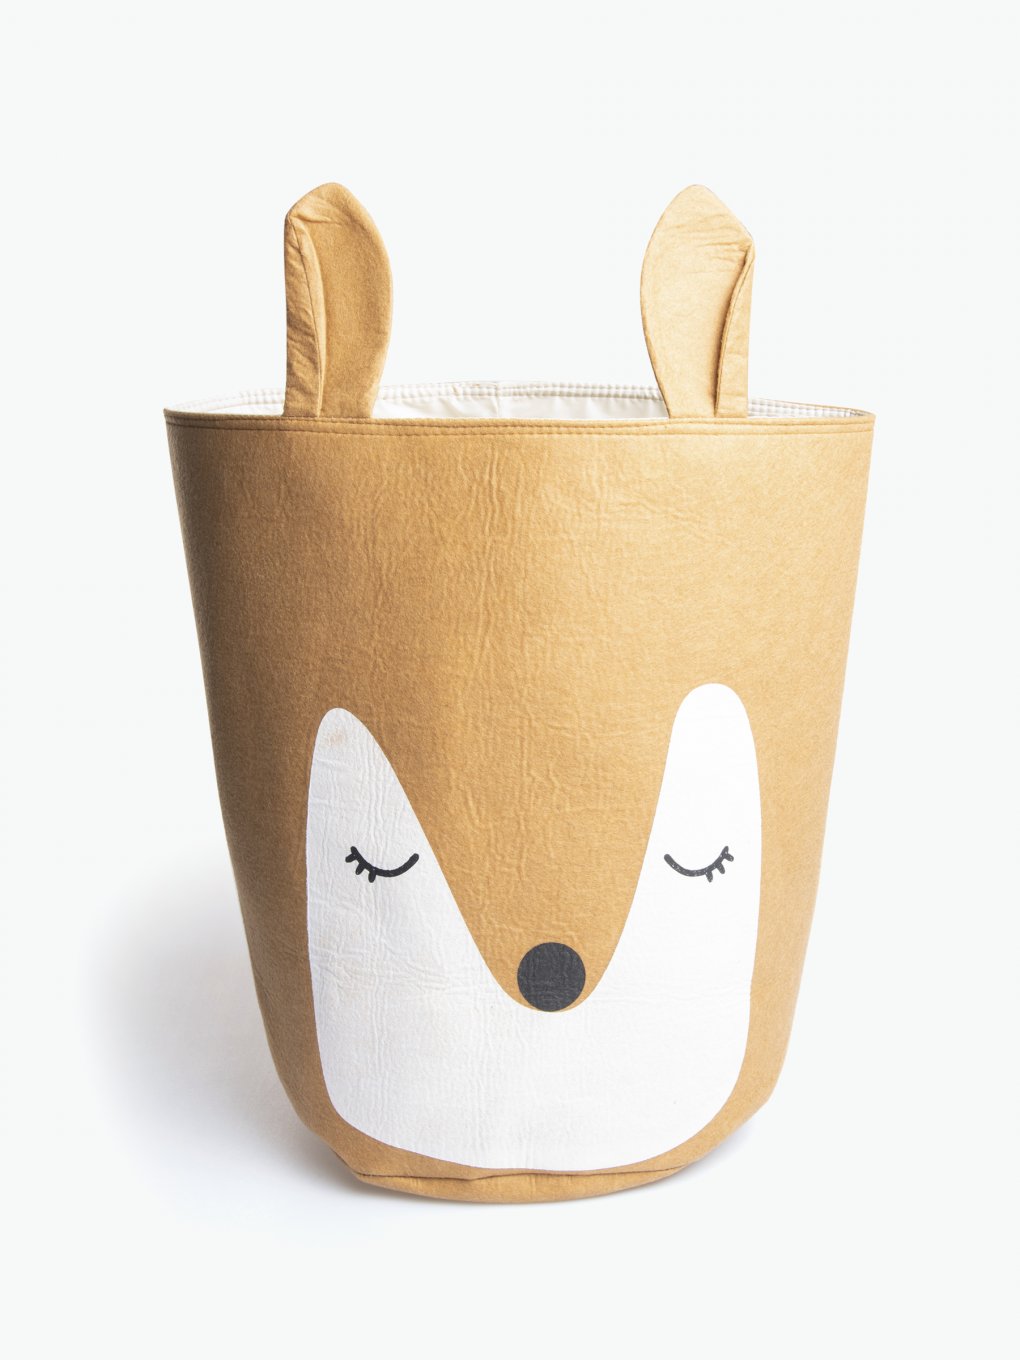 Basket with fox design